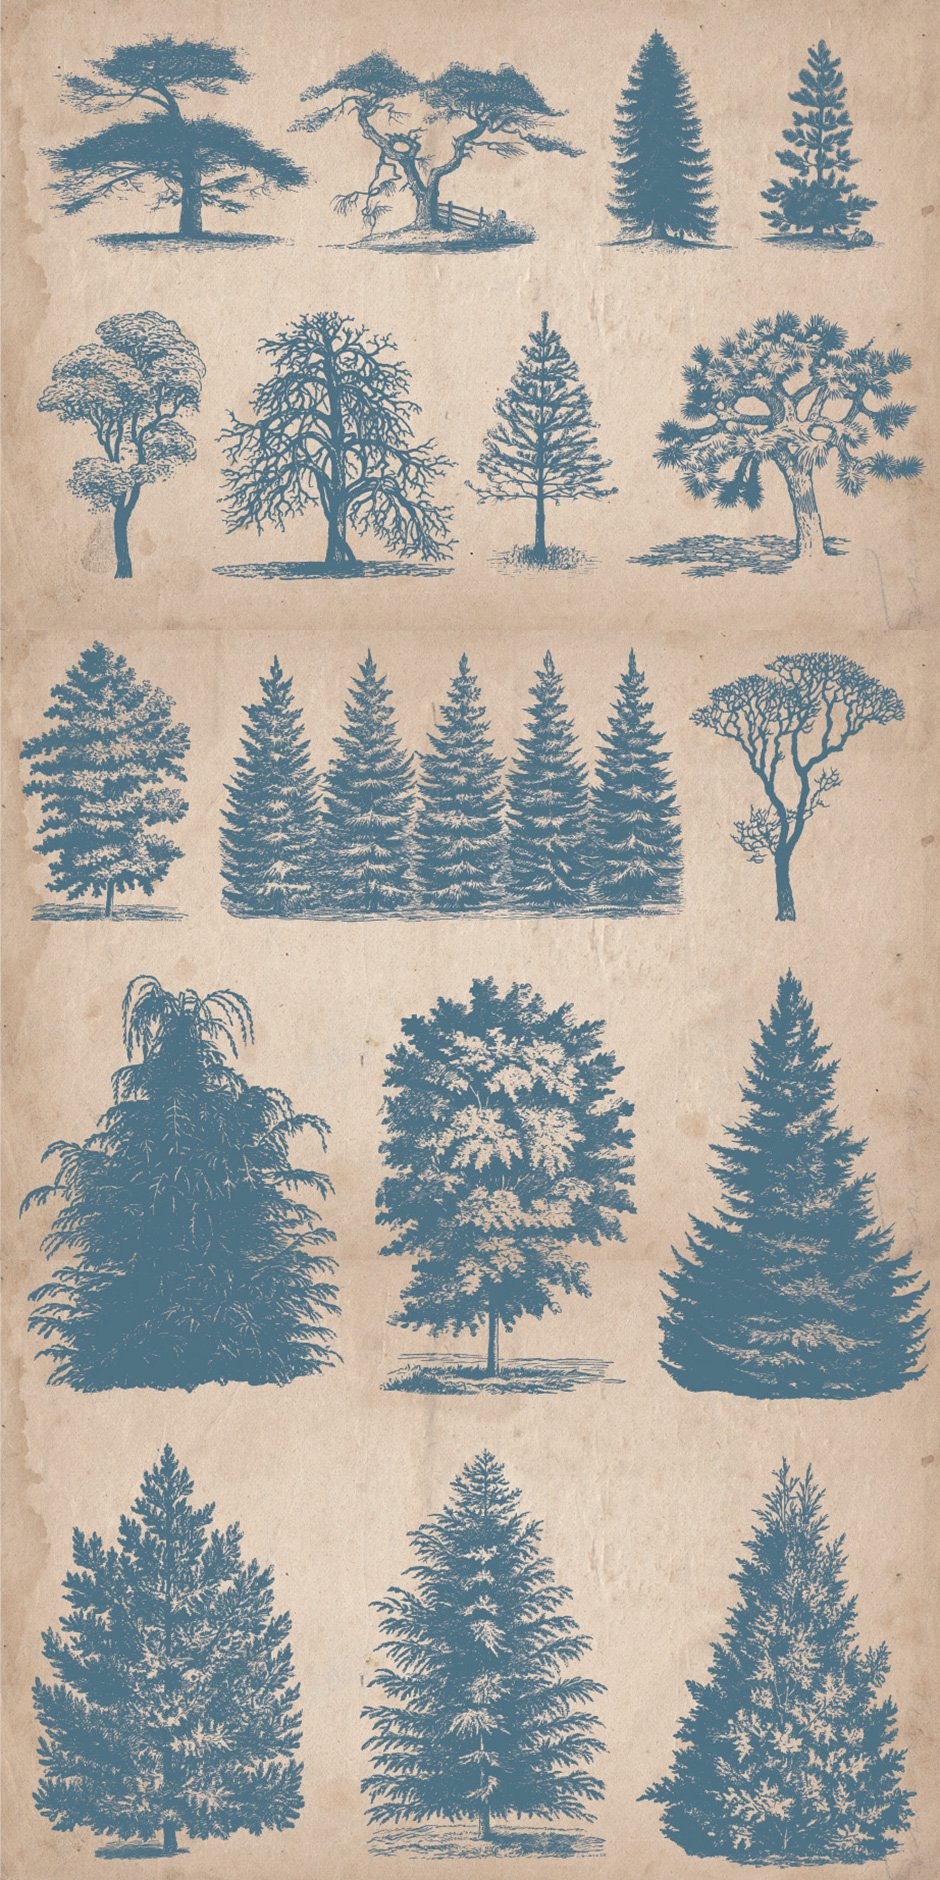 64 Vintage Hand-drawn Trees